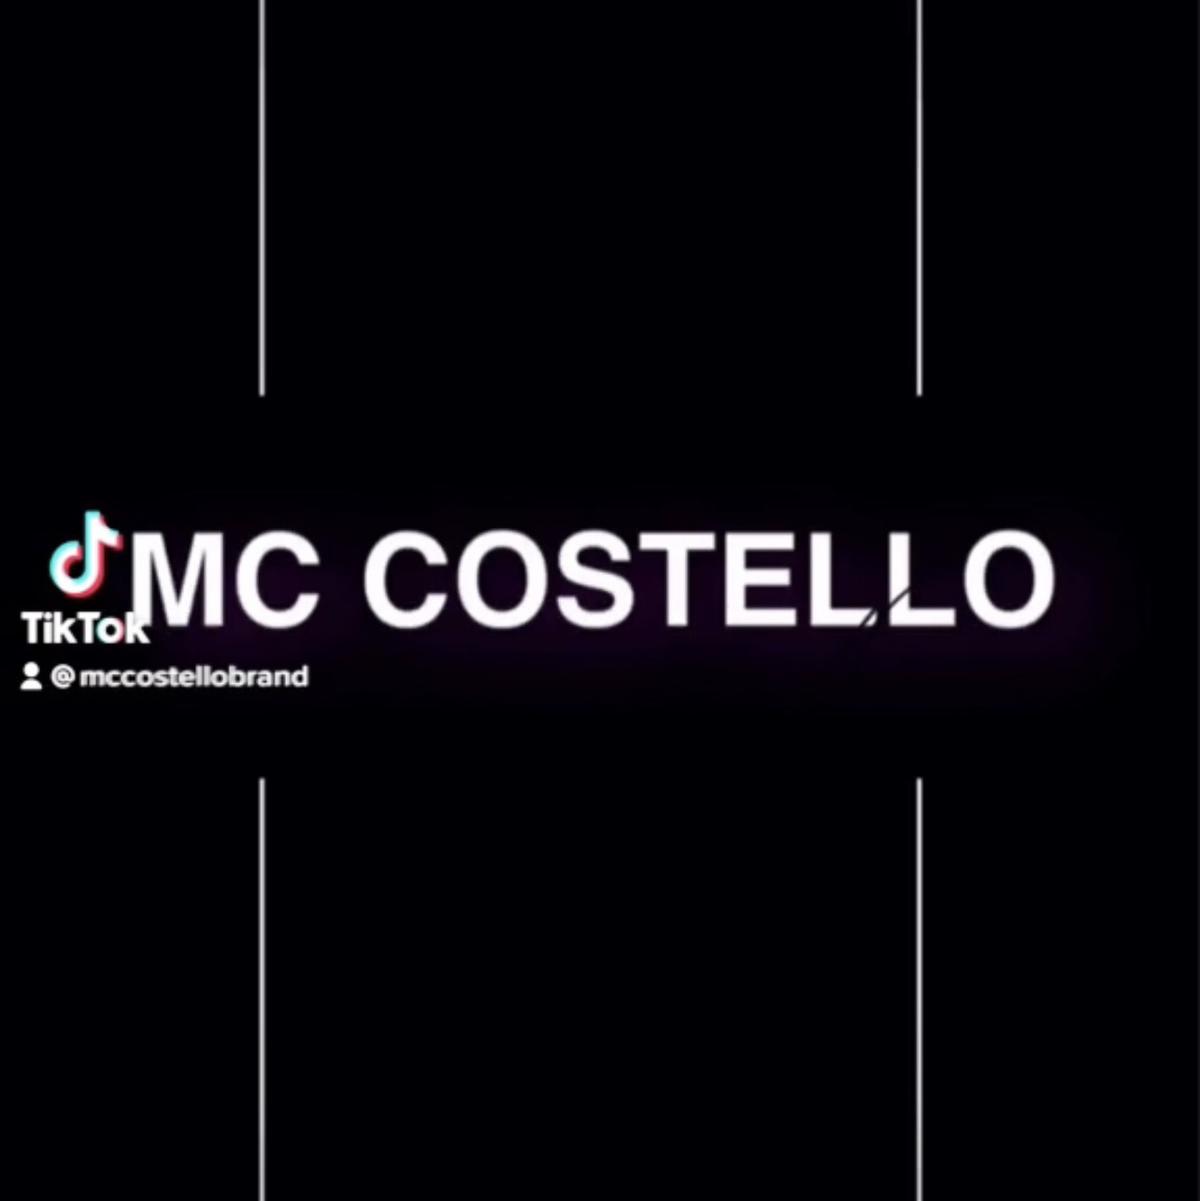 MC COSTELLO 's images